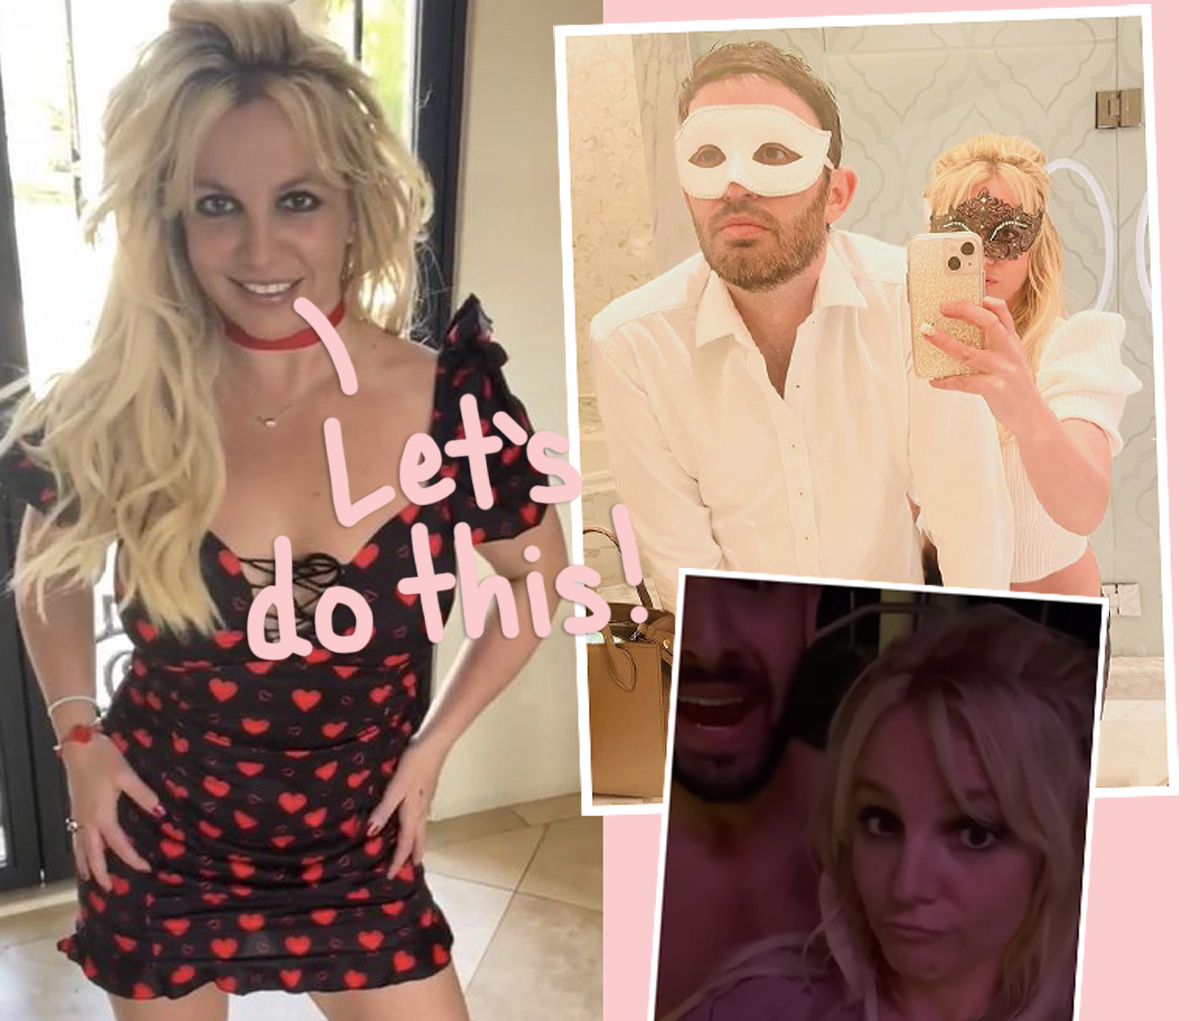 #Busy Britney! Rumors Of New Vegas Show & TV Appearances Swirling For Spears!